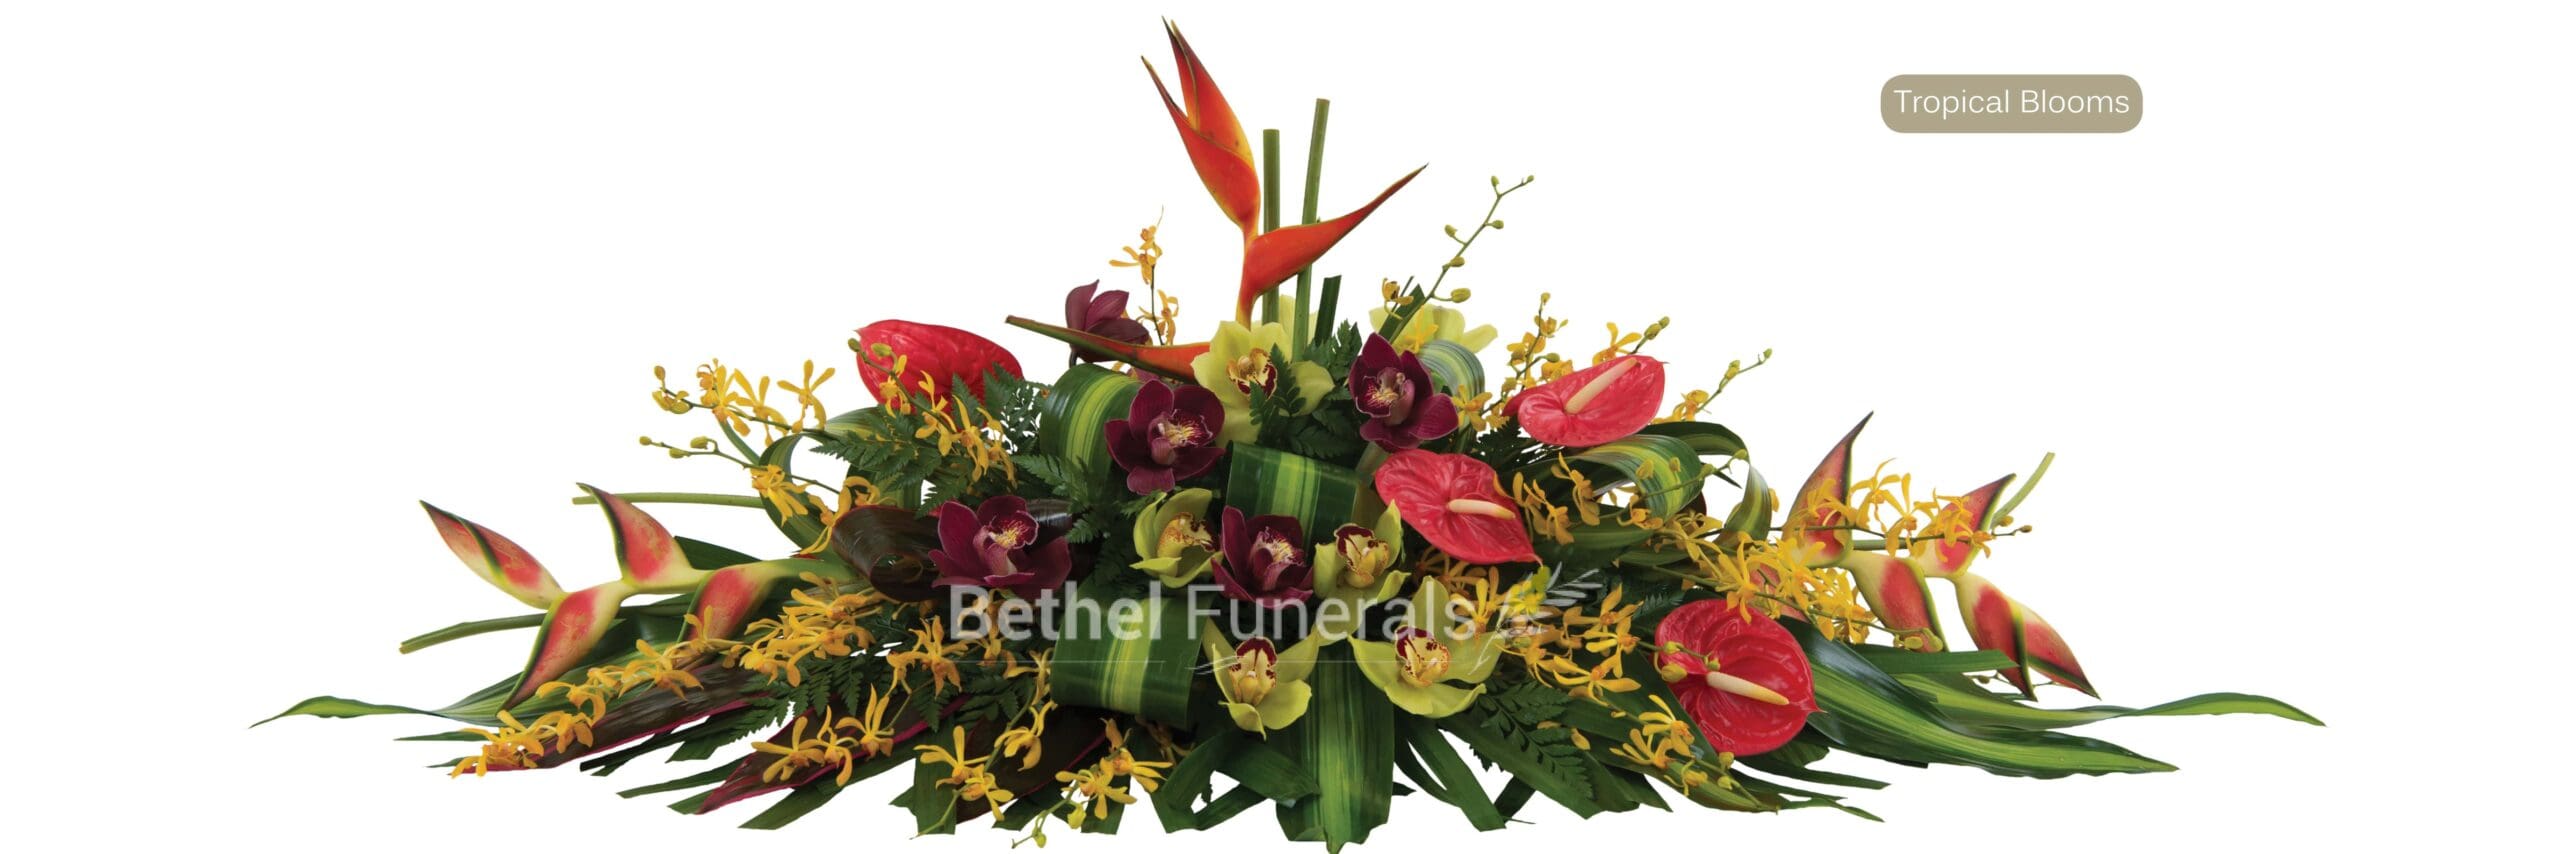 tropical blooms funeral flowers